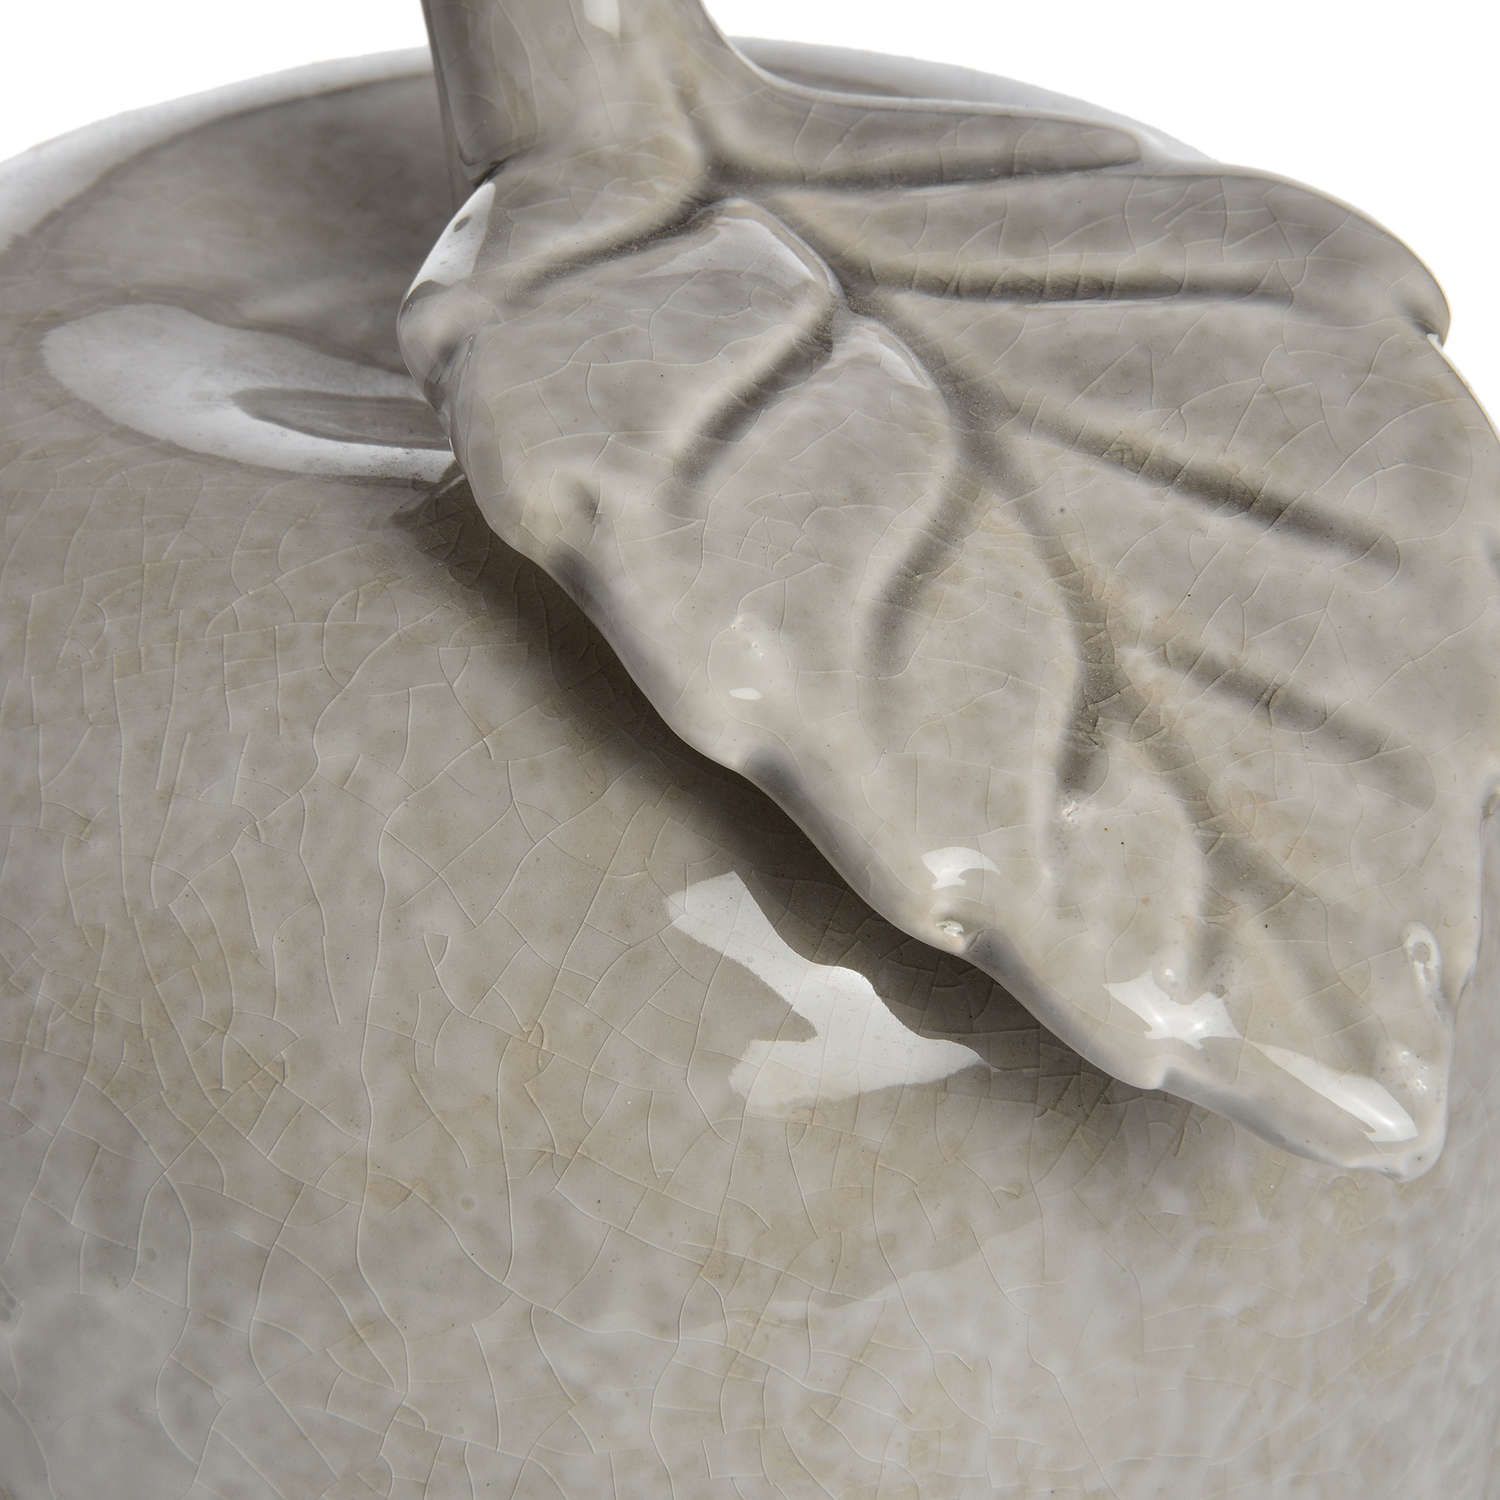 Antique Grey Large Ceramic Apple - Ashton and Finch